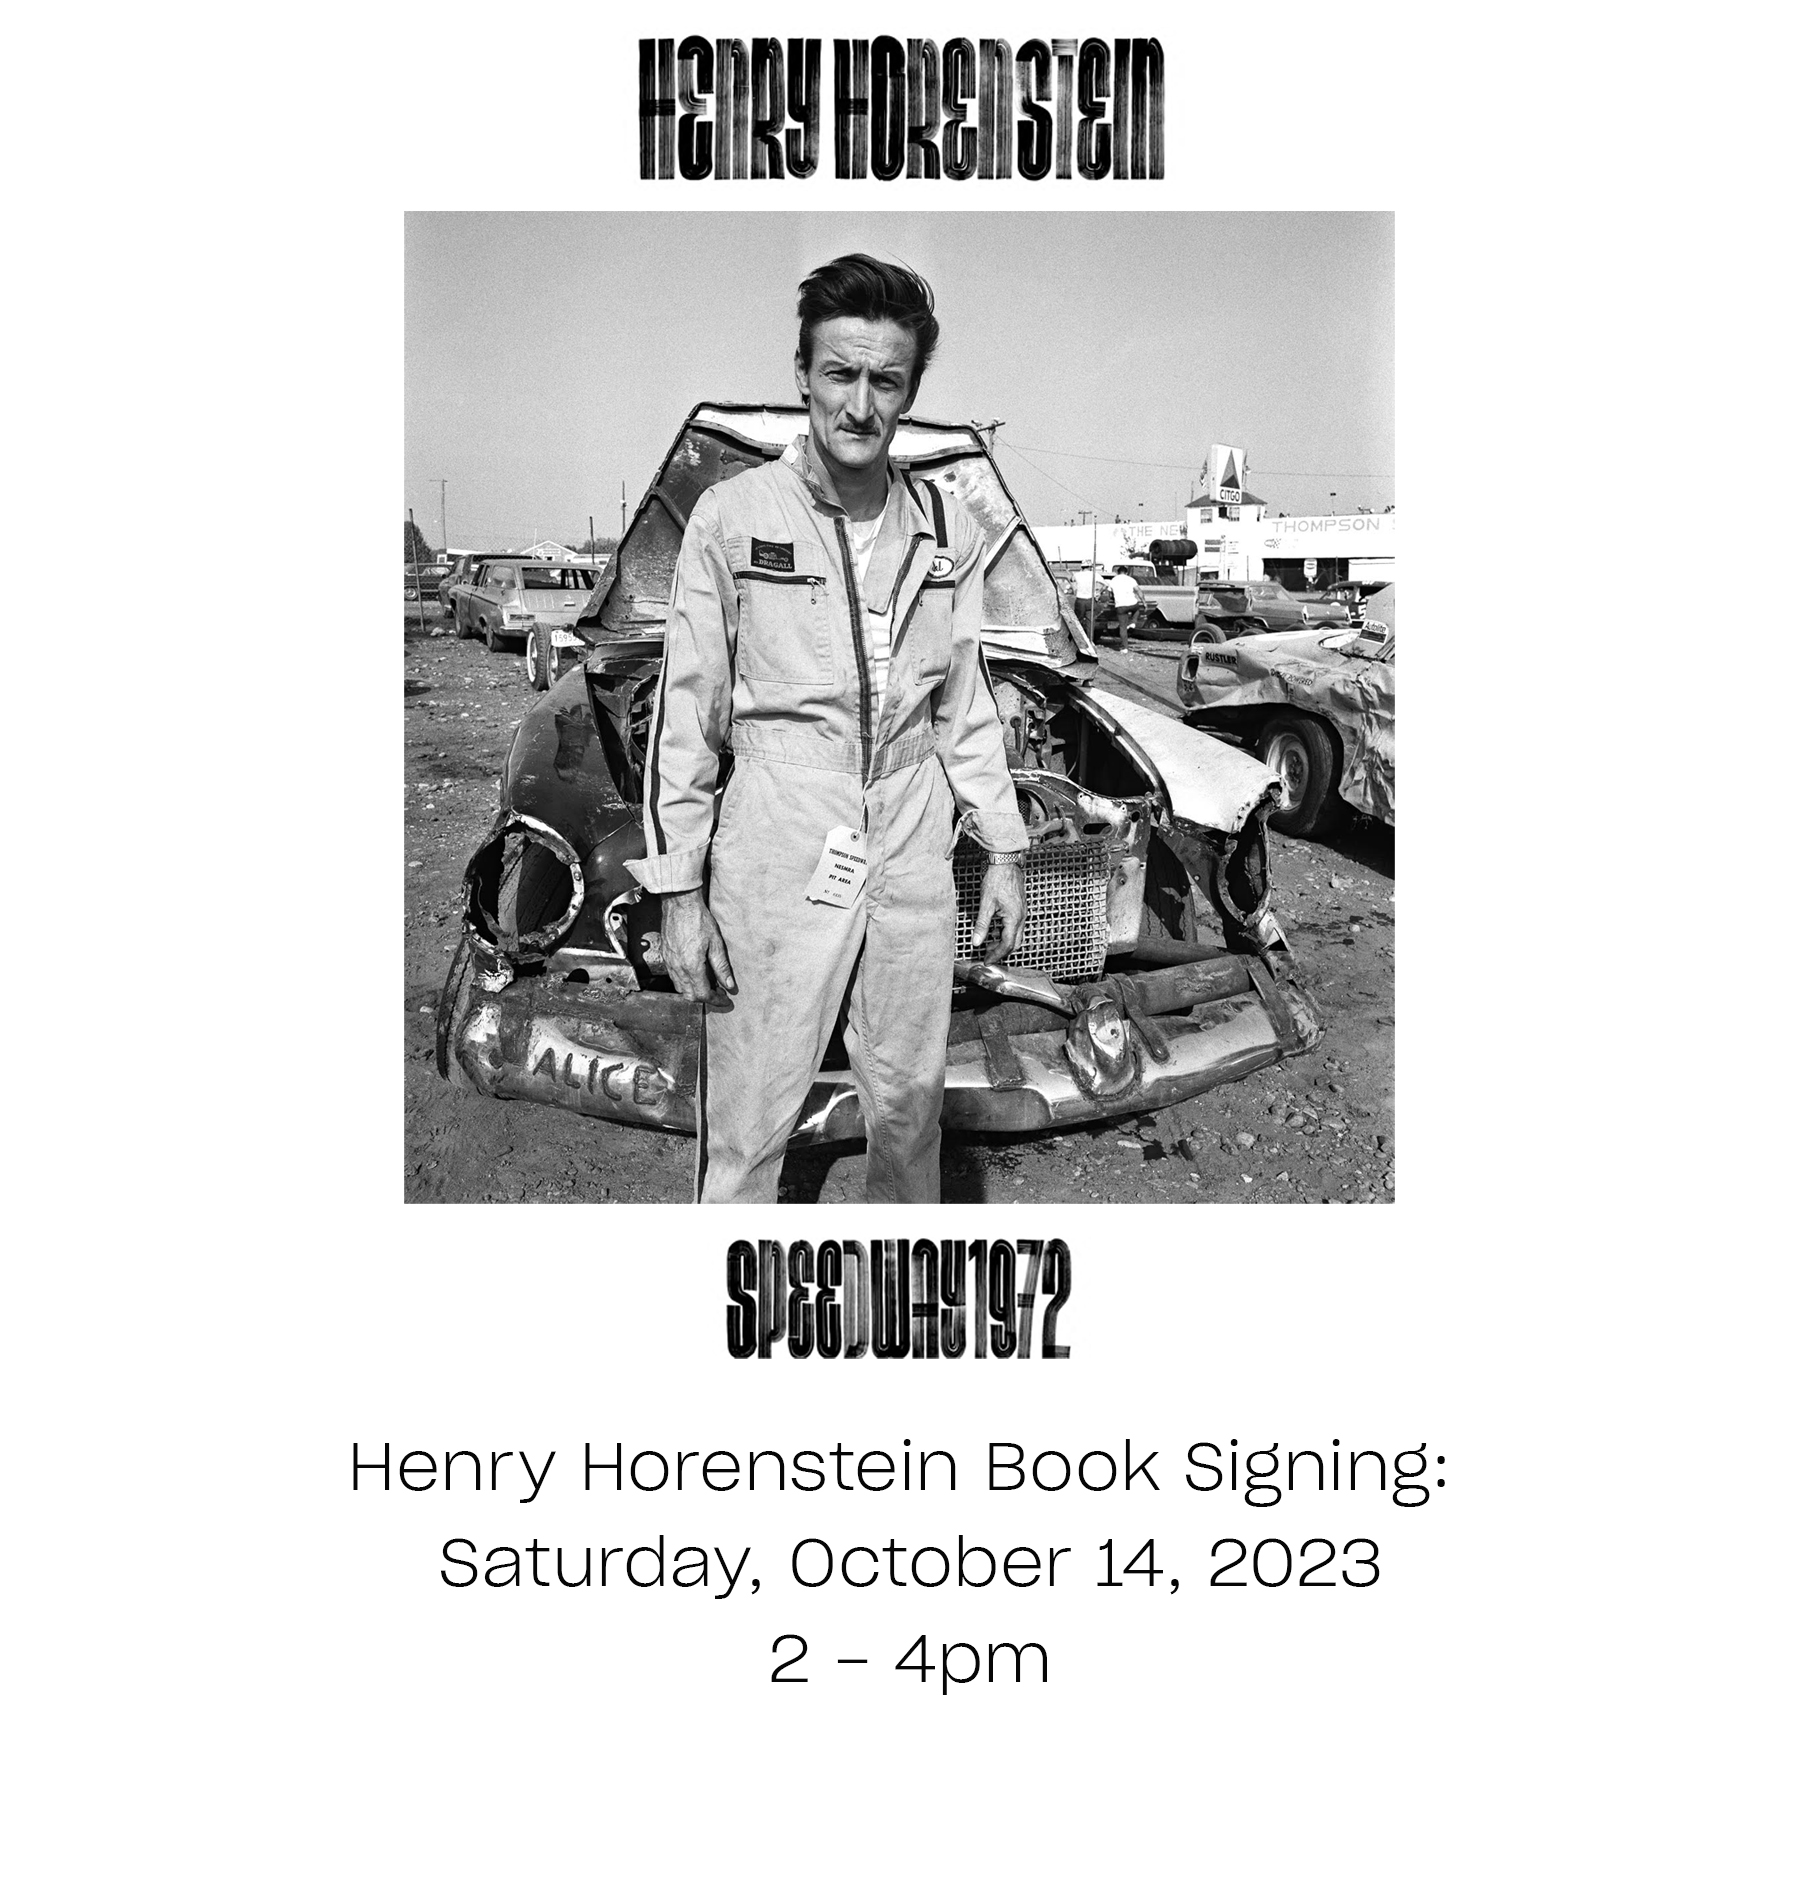 Henry Horenstein booksigning for Speedway, October 14, 2-4pm